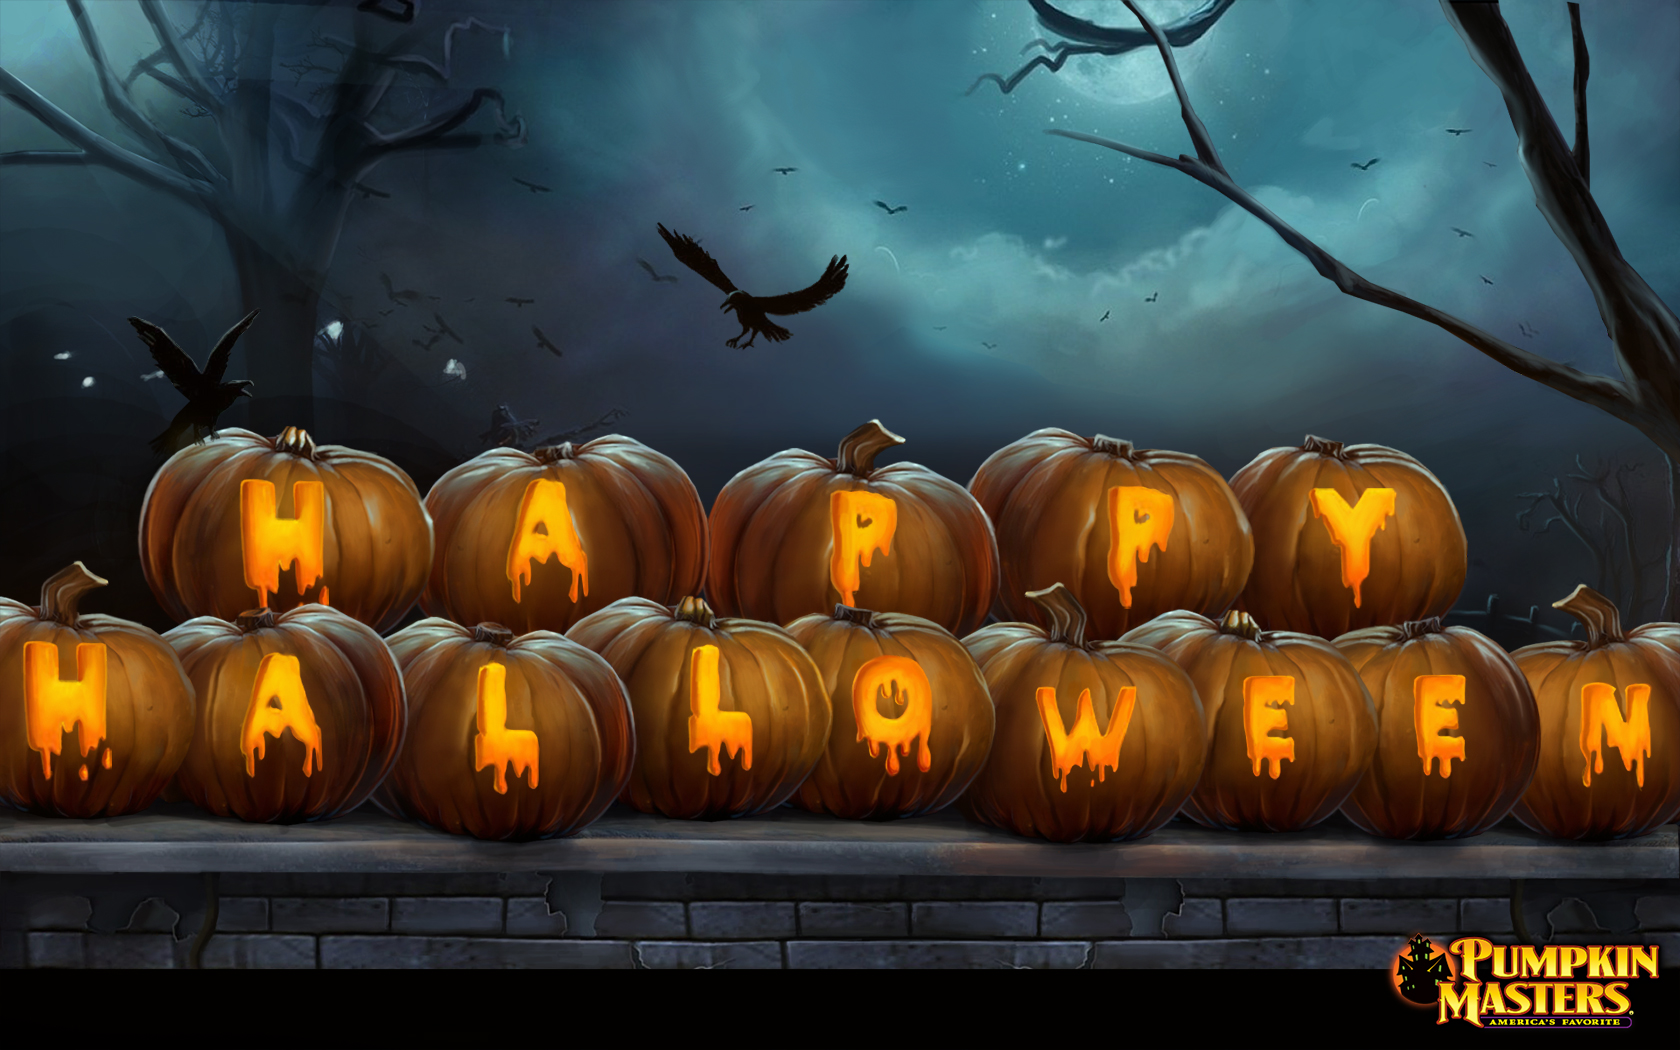 Top 10 beautiful animated halloween Windows 8.1/10 wallpapers